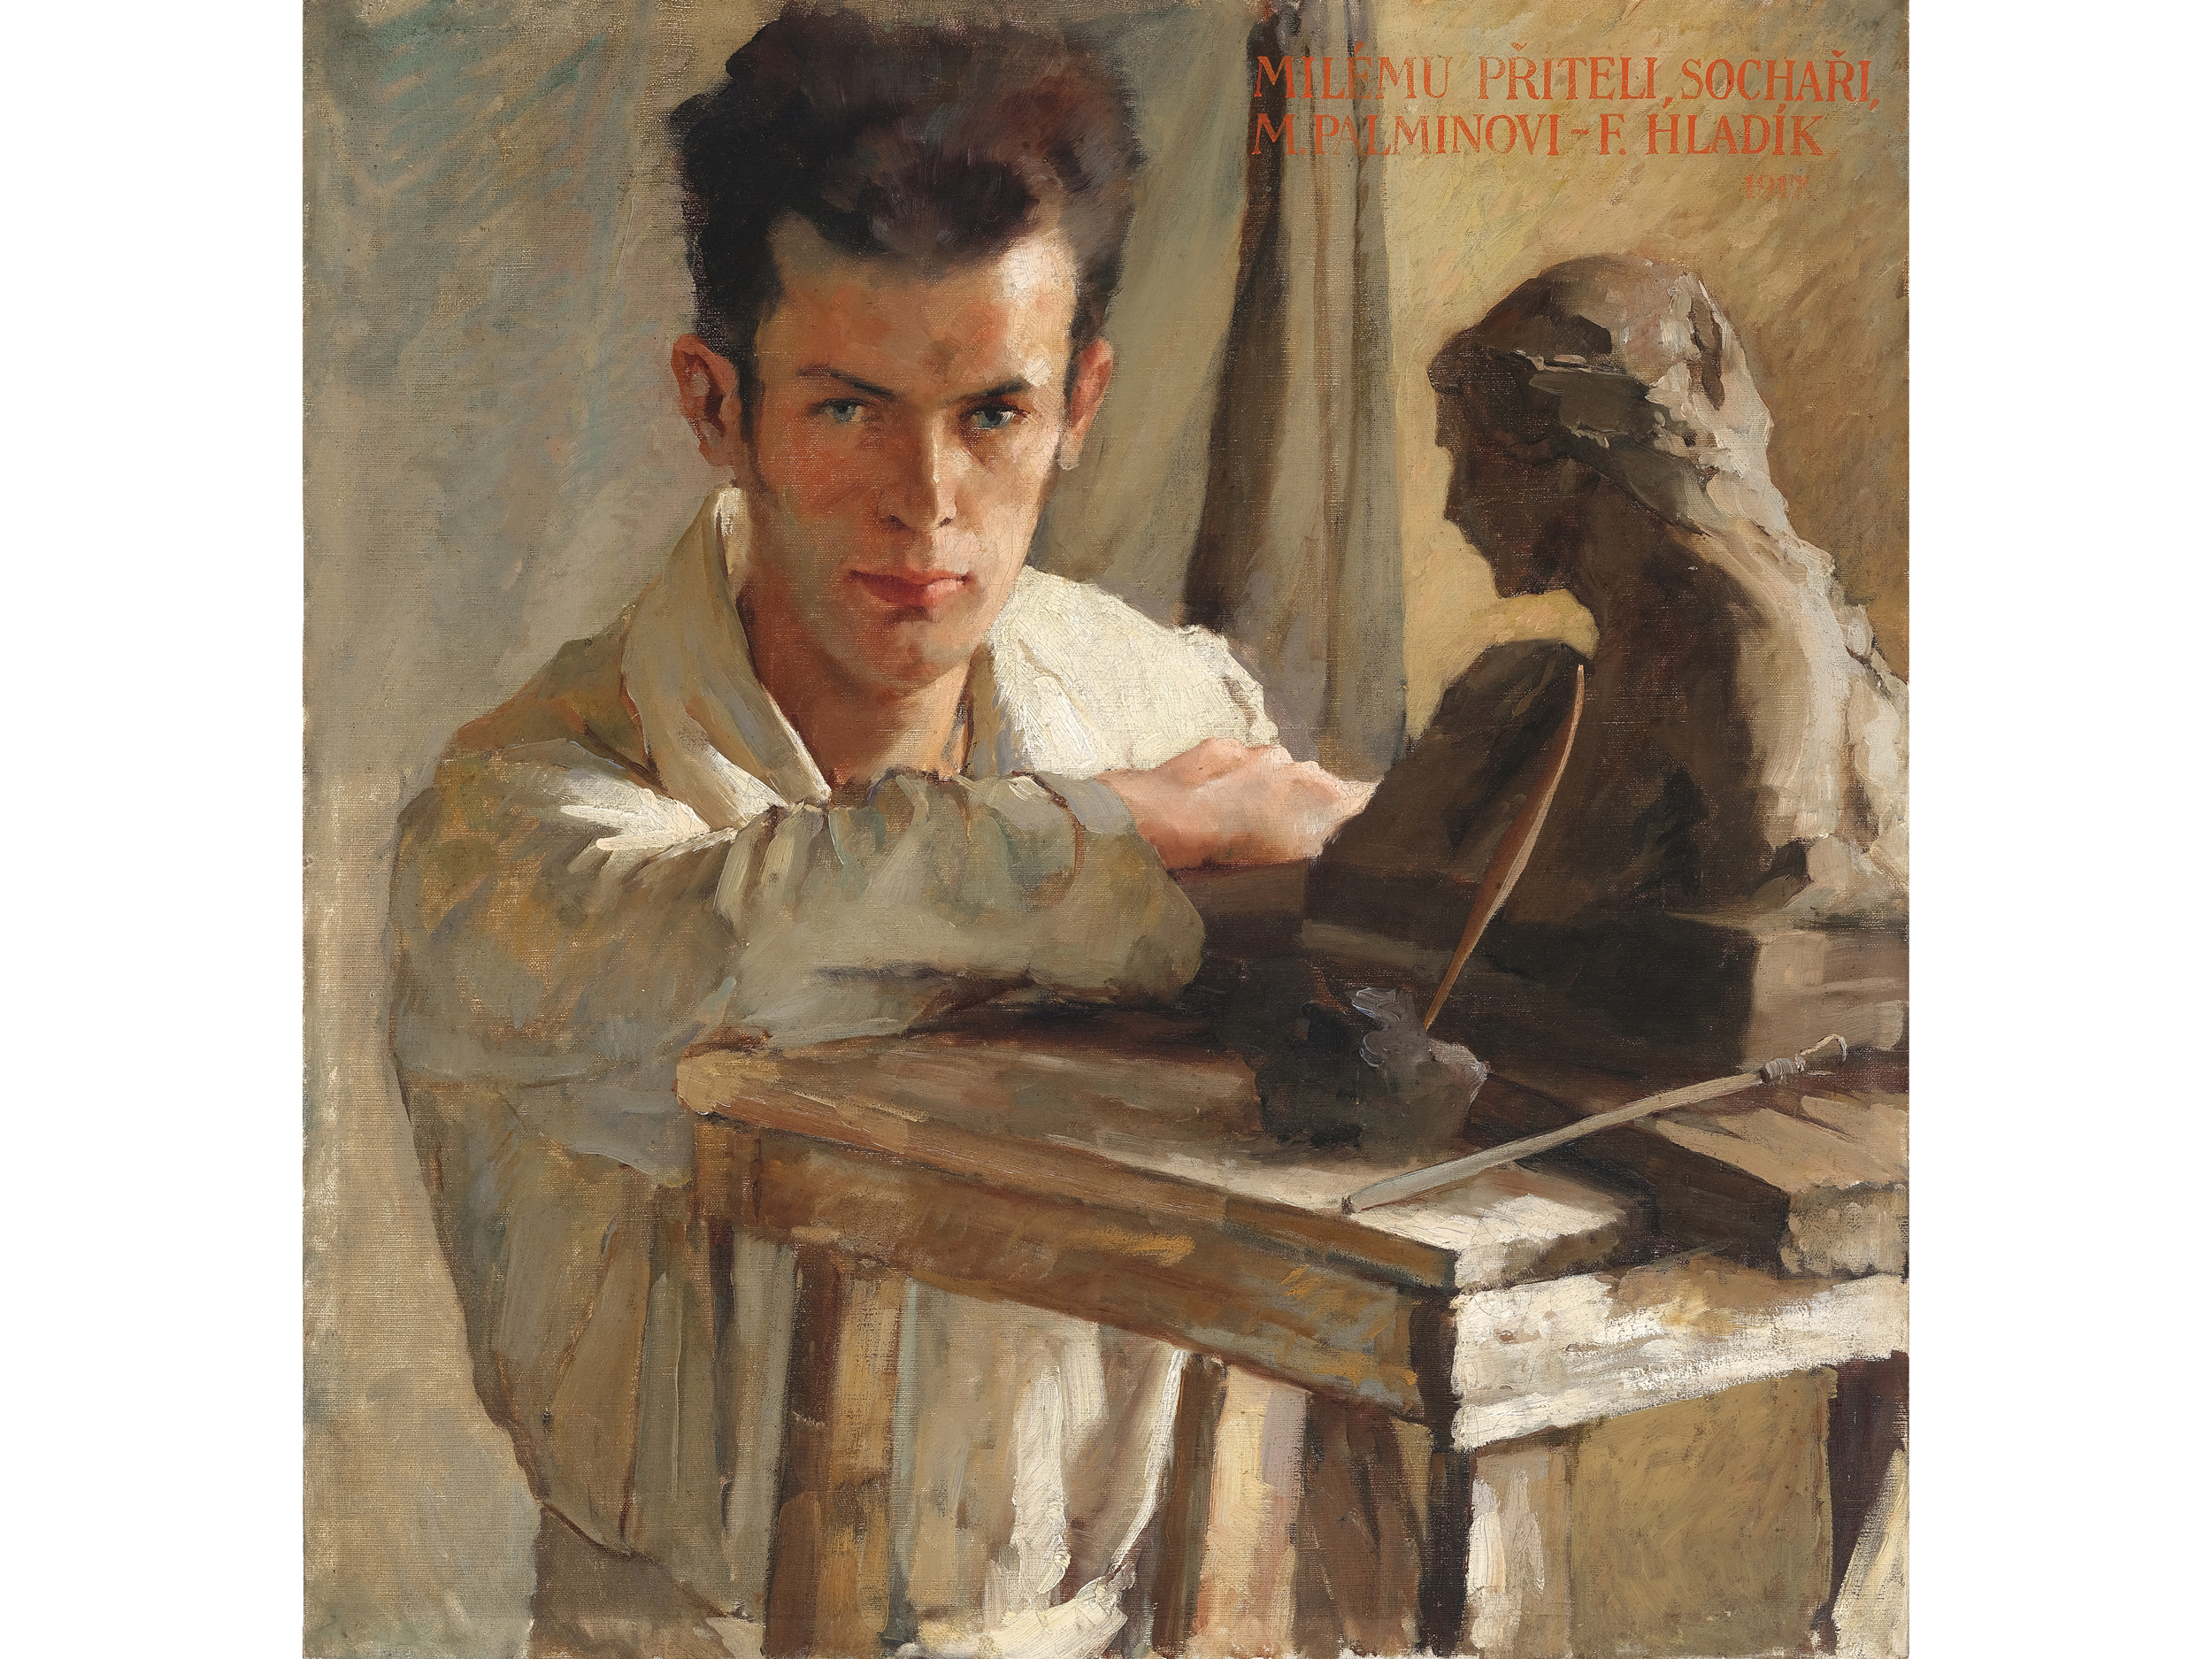 František Hladík, Prague 1887 - 1947 Skála, Artist in studio